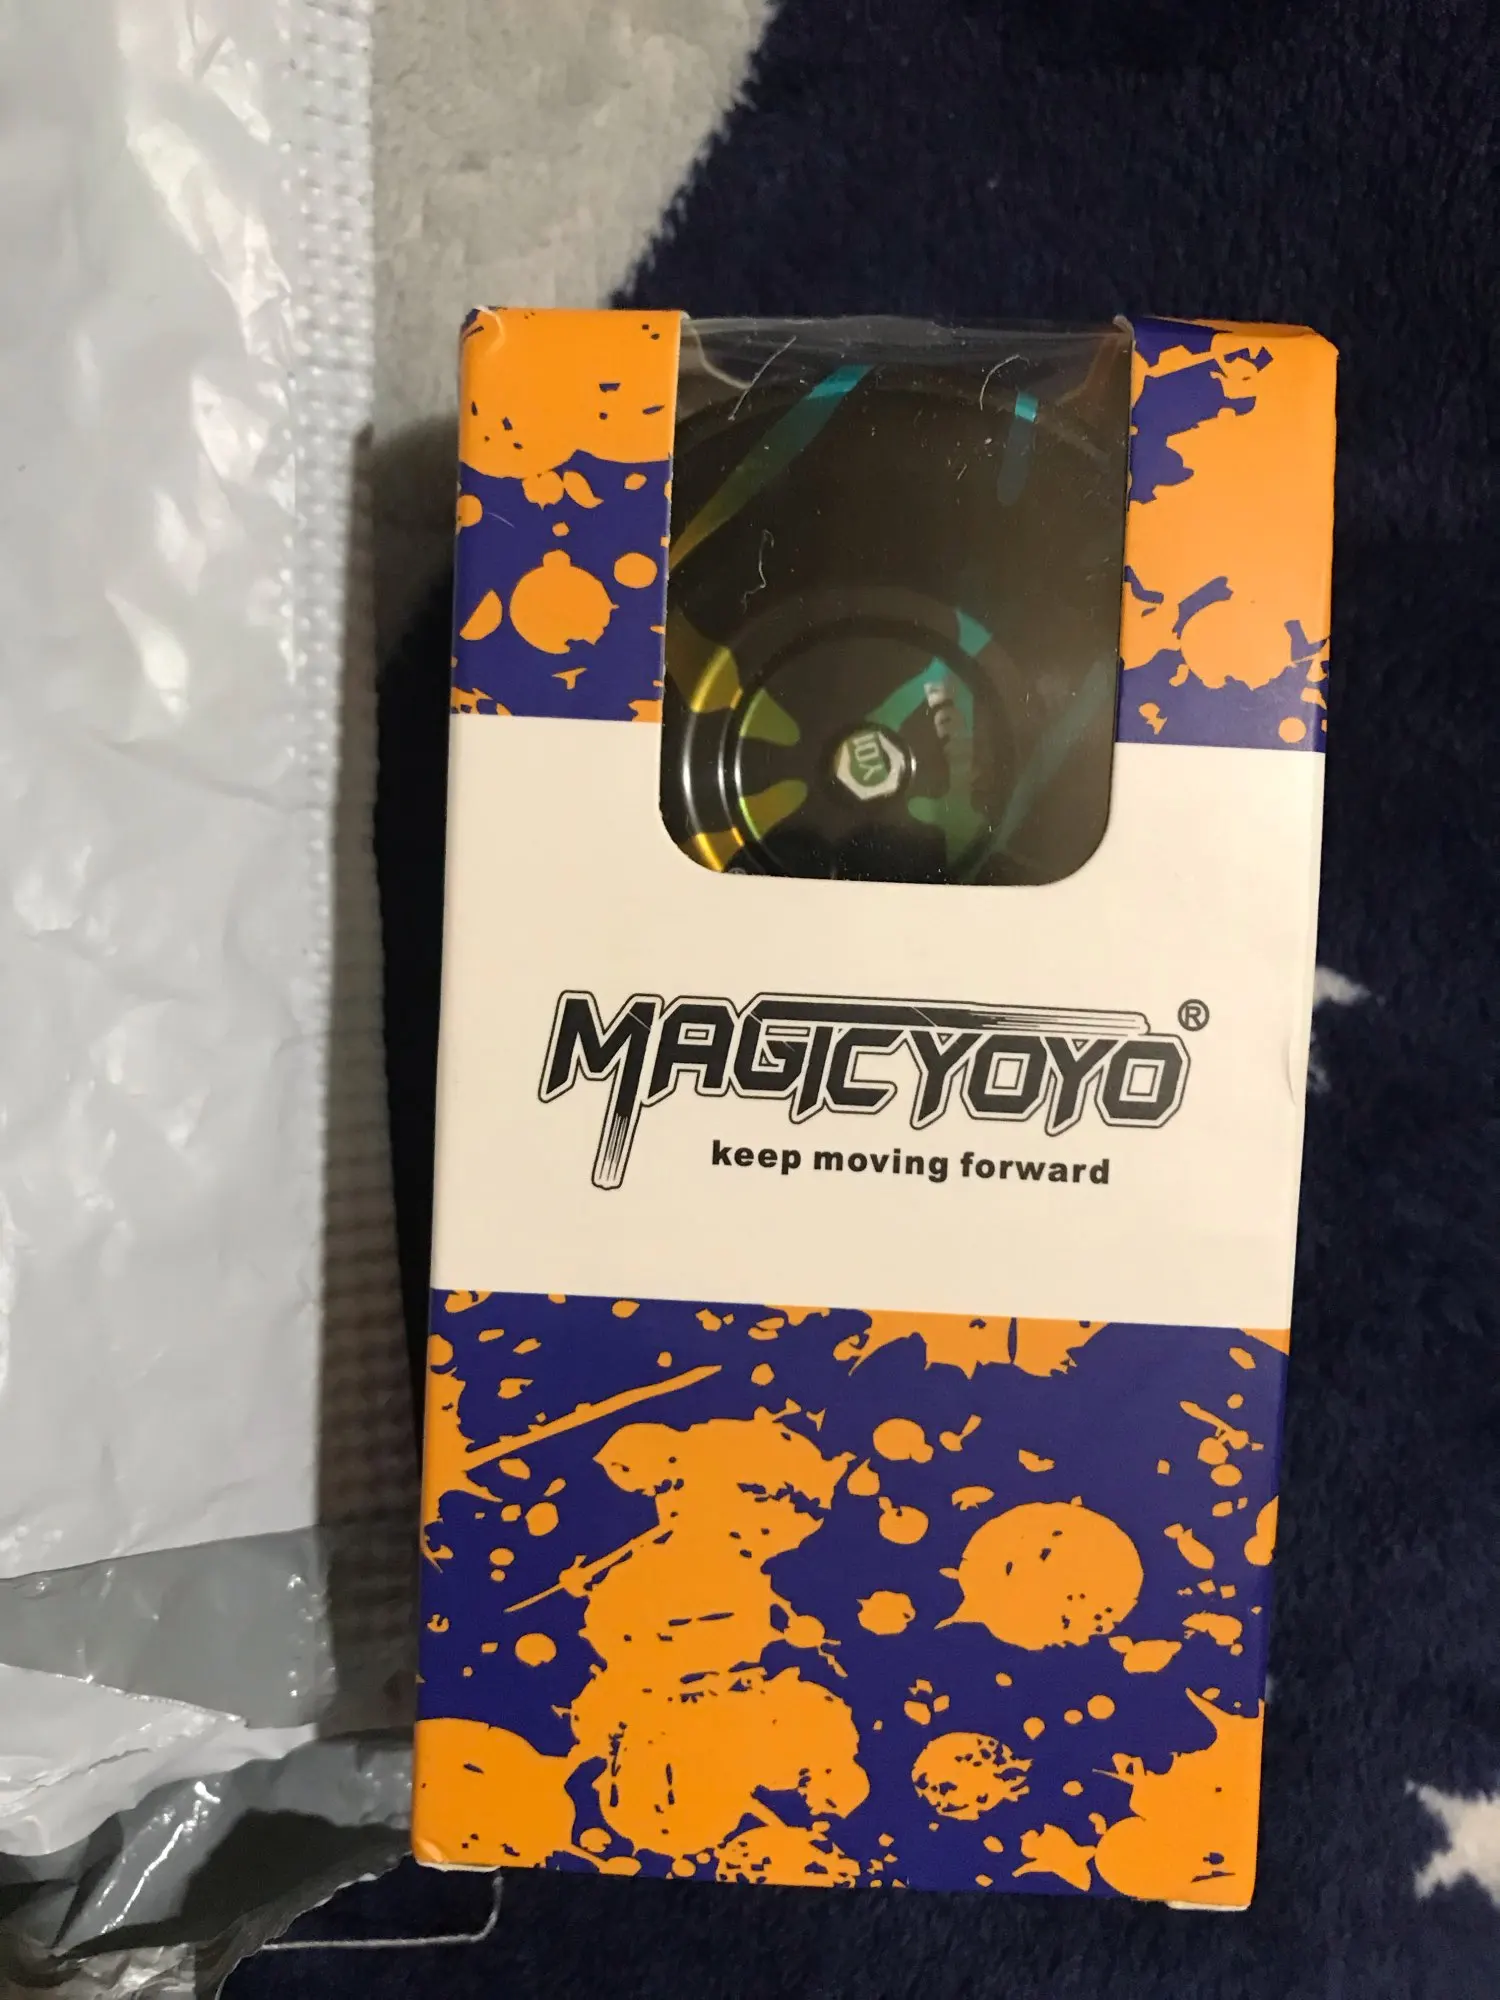 Magic Yoyo Alloy Aluminum Premium Responsive High Speed Yoyo + 5 Strings and Yo-Yo Glove Gift (Blue) photo review